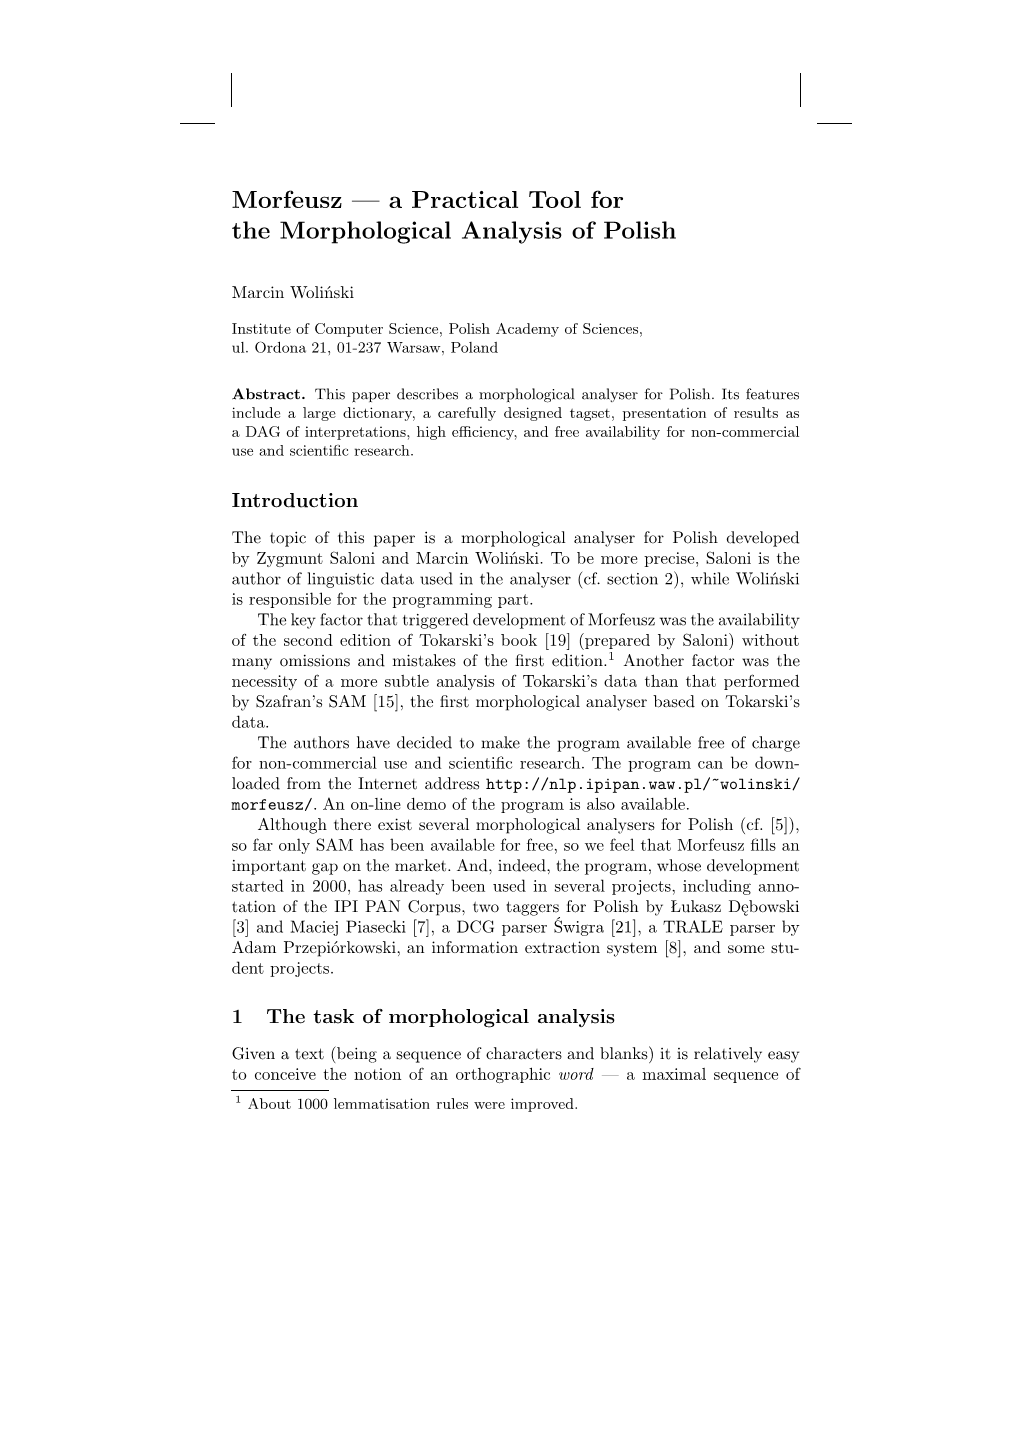 Morfeusz — a Practical Tool for the Morphological Analysis of Polish